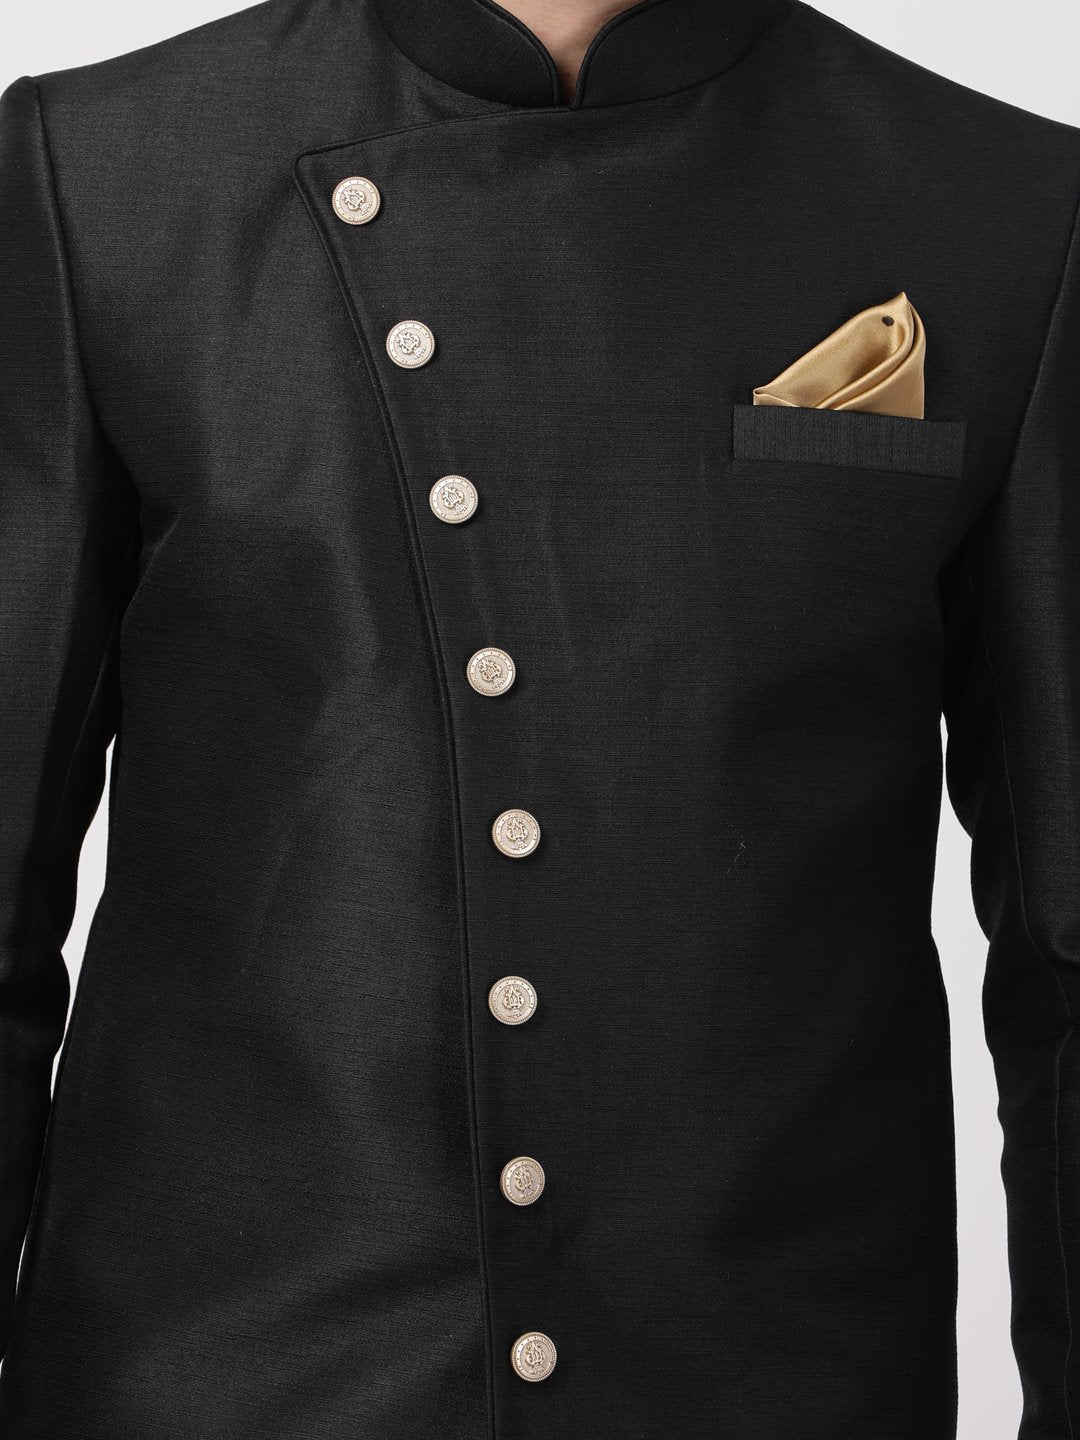 Men's Black Silk Blend Sherwani Only Top